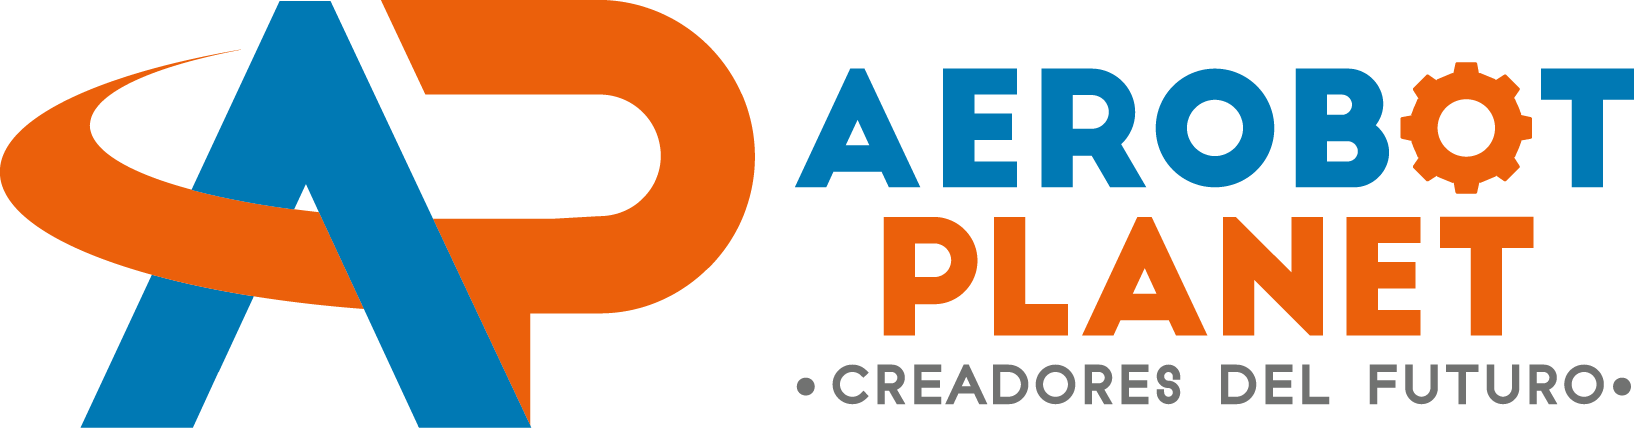 Aerobot-planet-logotipo